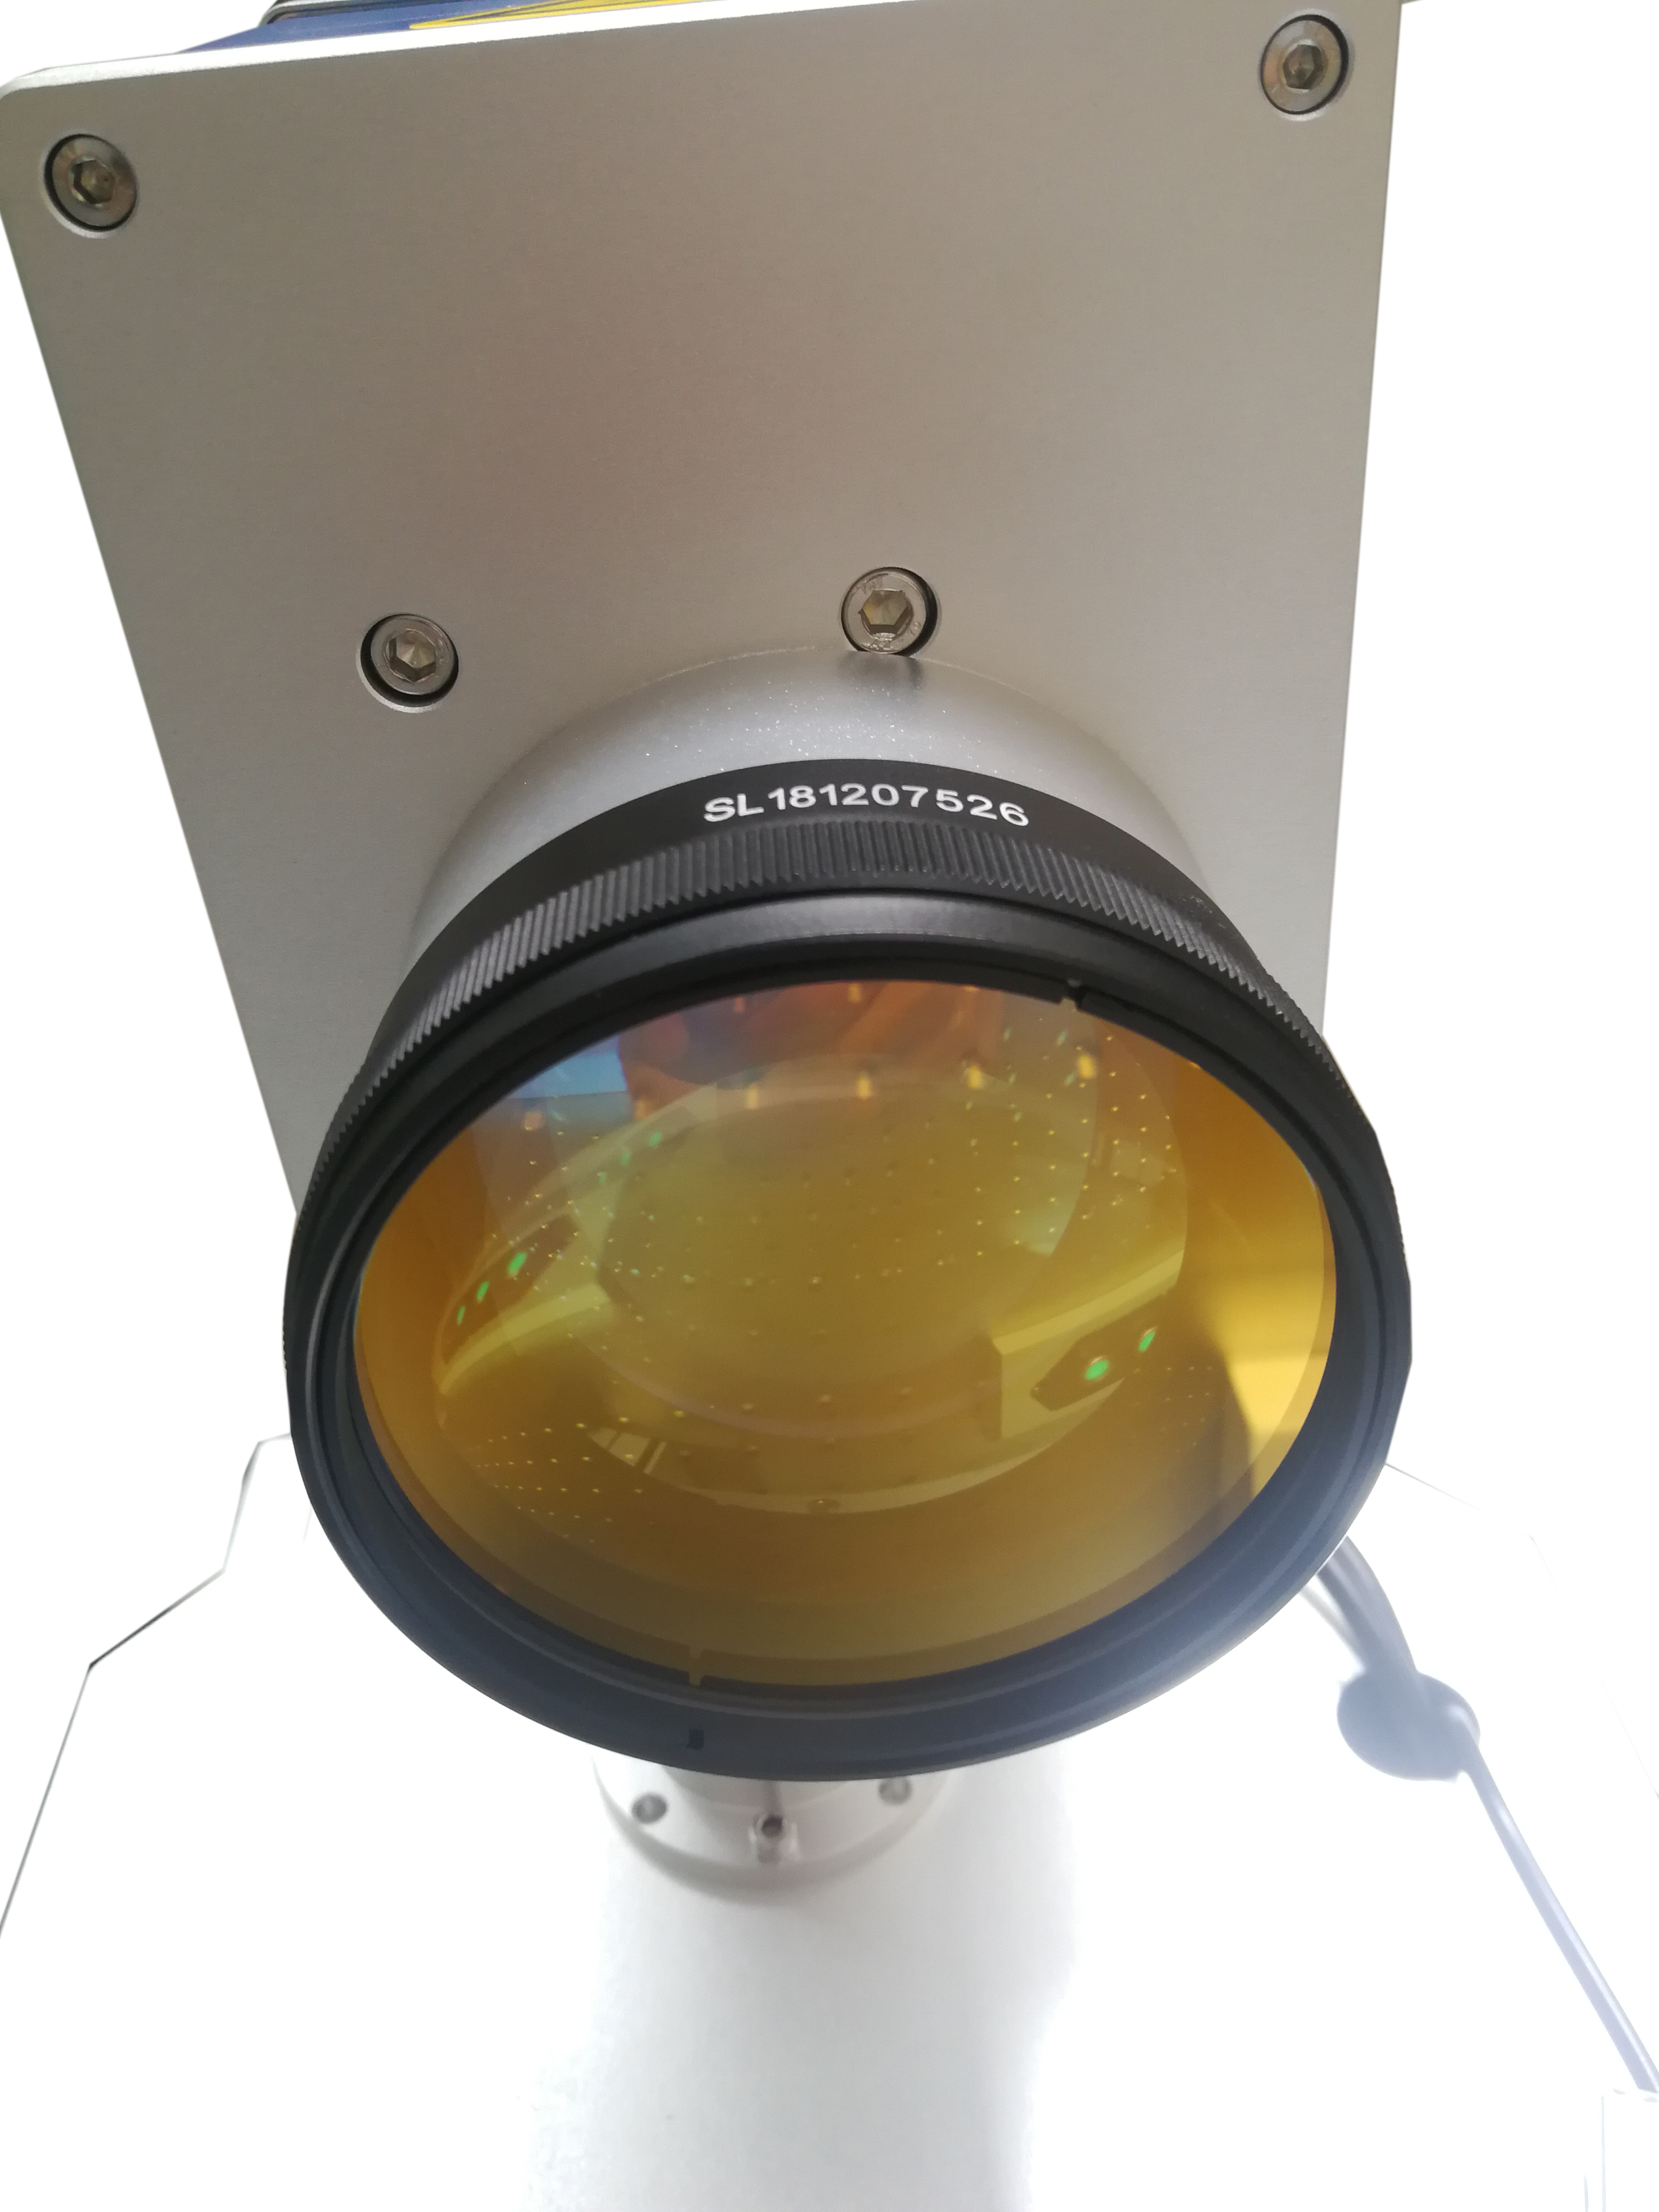  355nm wavelength UV Laser Marking Machine factory price